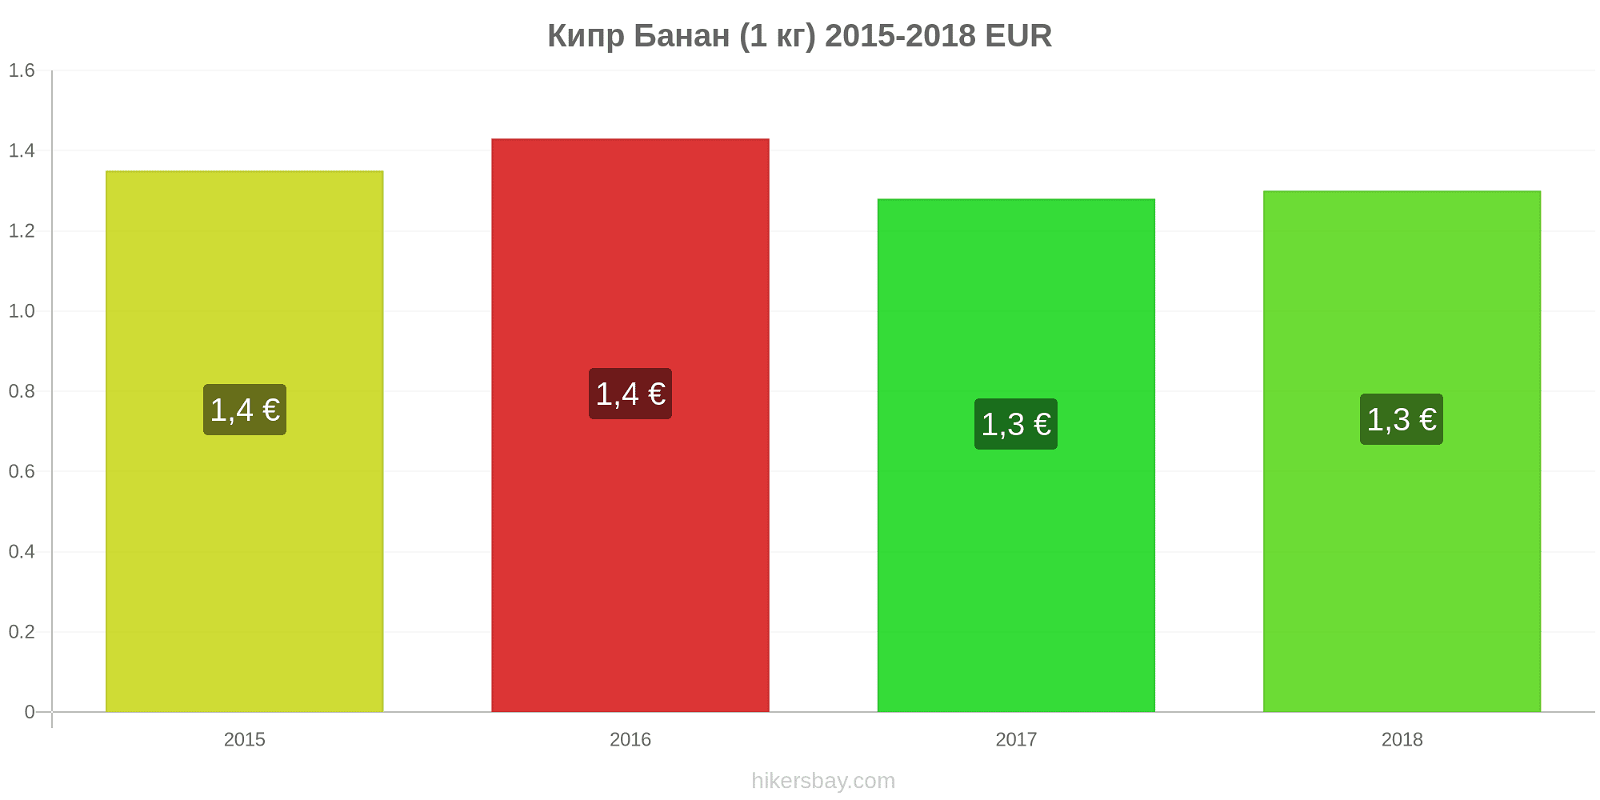 Кипр изменения цен Бананы (1 кг) hikersbay.com